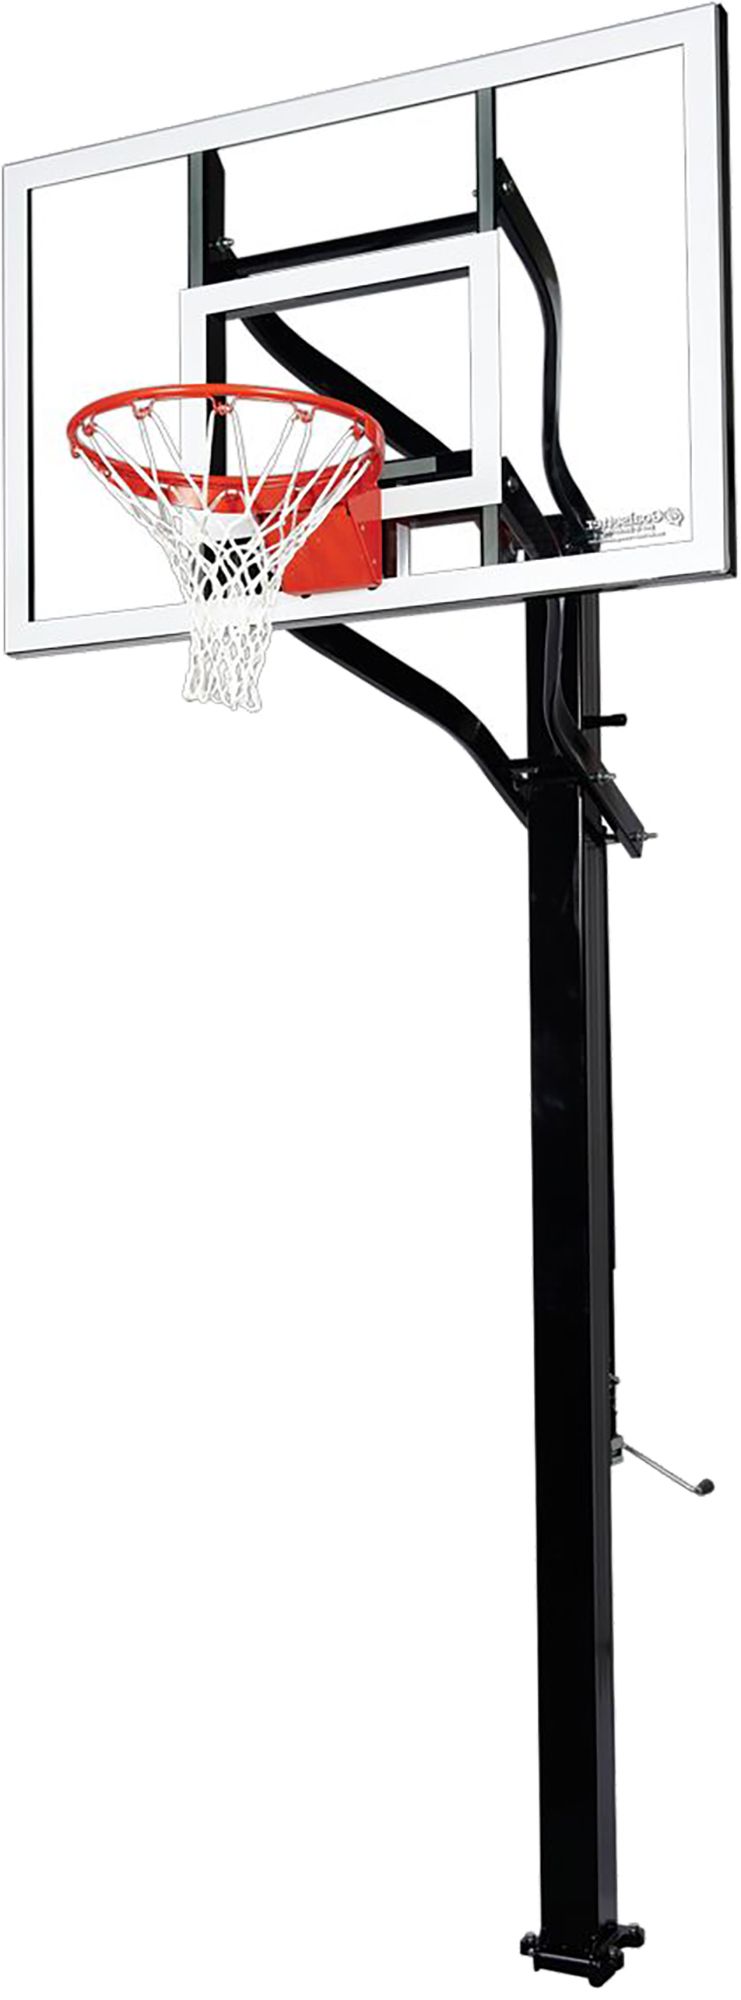 Goalsetter X672 72” Extreme Series Glass In-Ground Basketball Hoop